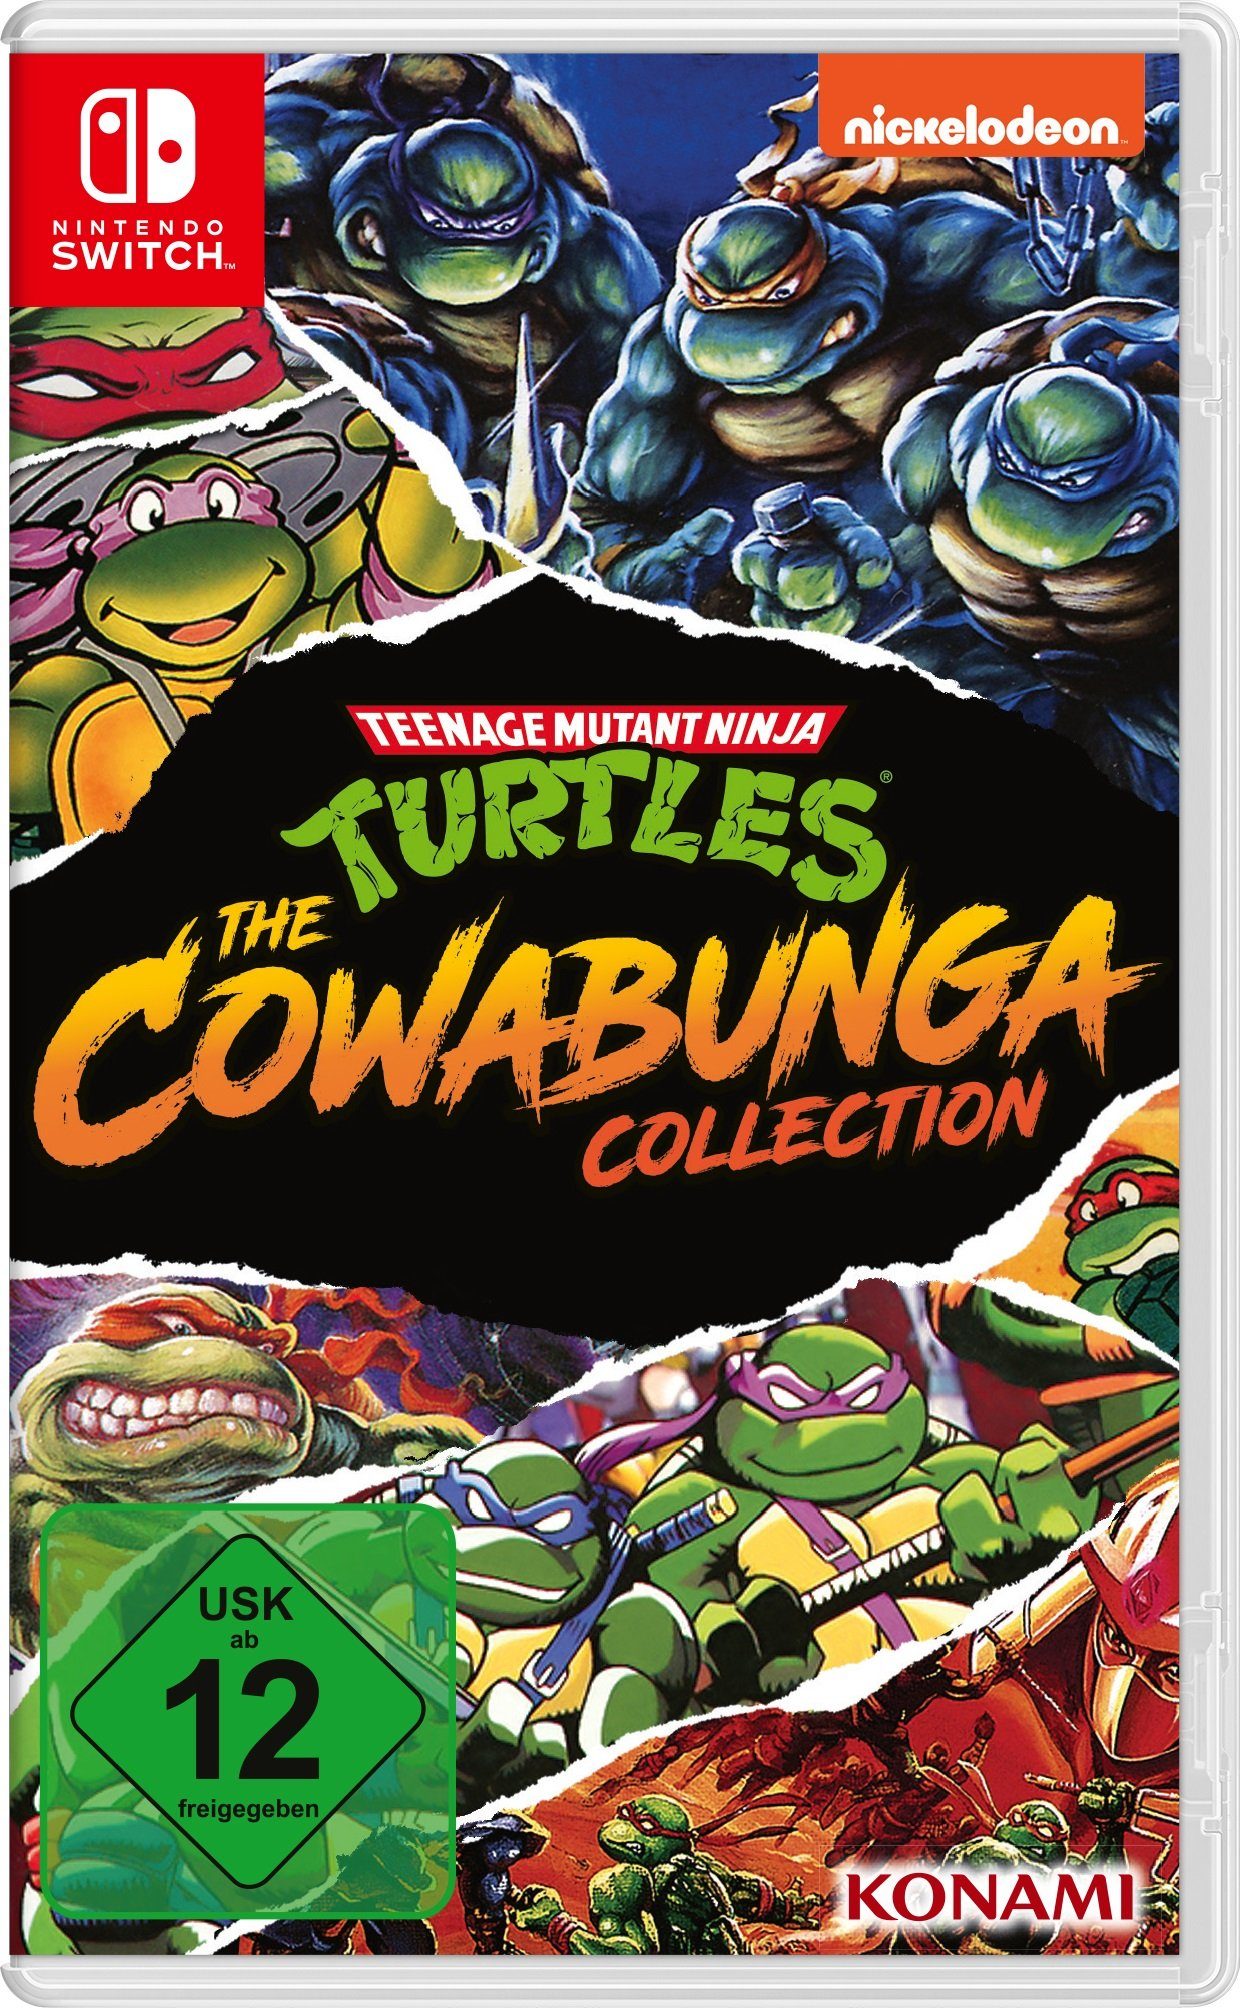 The Switch Nintendo Teenage Konami Mutant Collection Ninja Cowabunga - Turtles